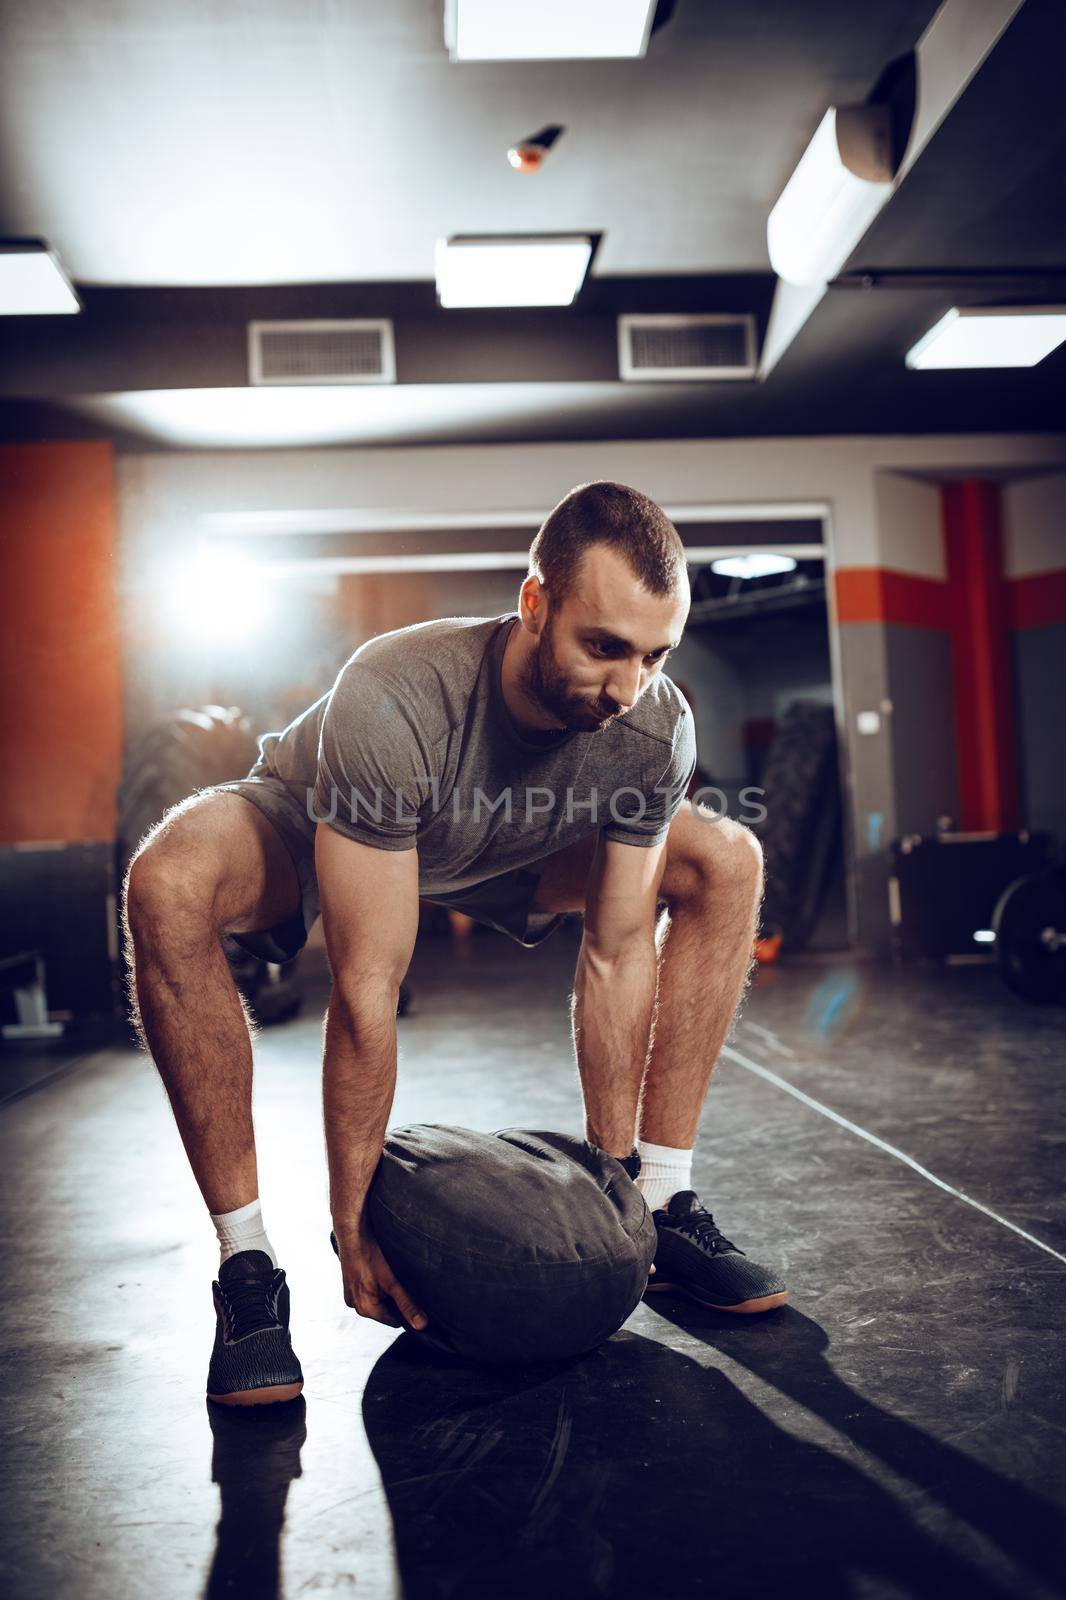 Strong man doing cross training with sandbag at the gym.